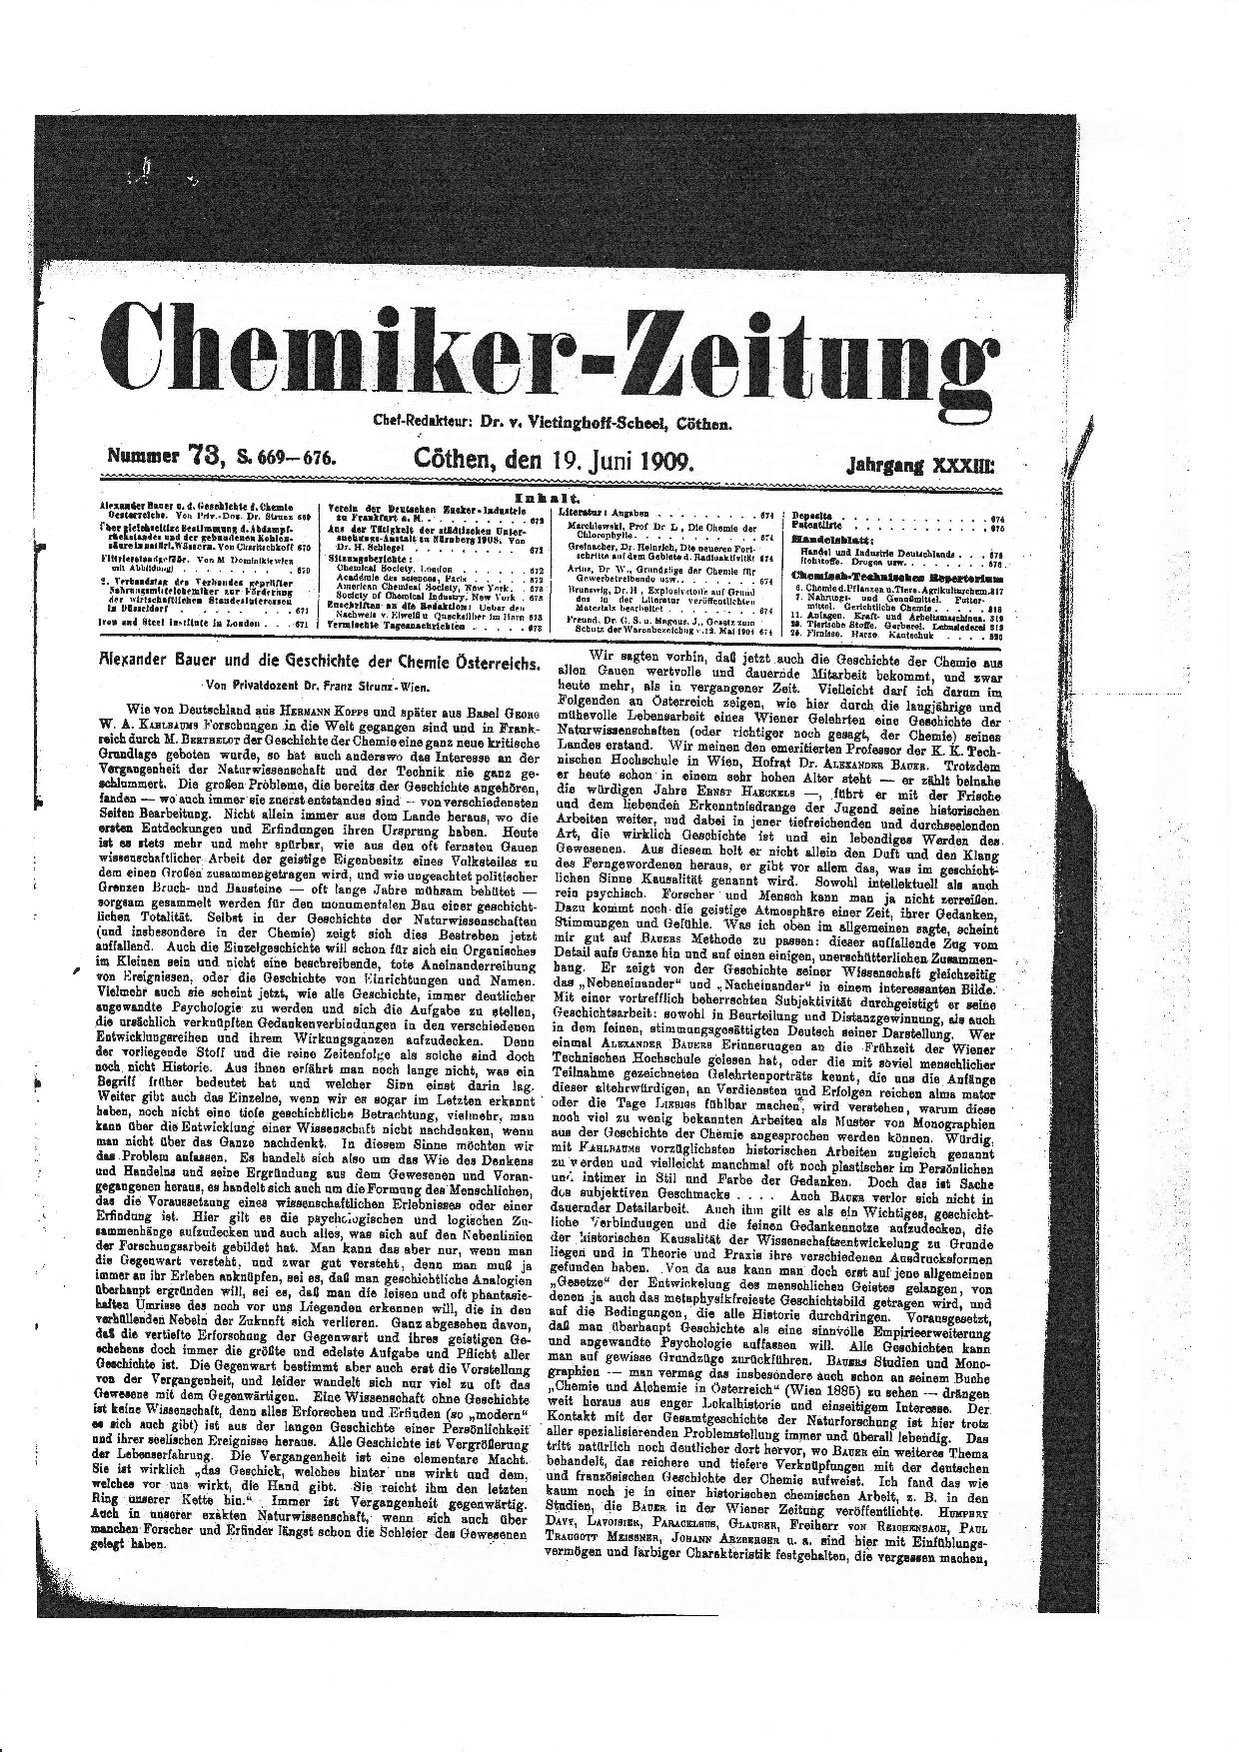 Dr-alexander-bauer-chemiker-zeitung-1909.pdf